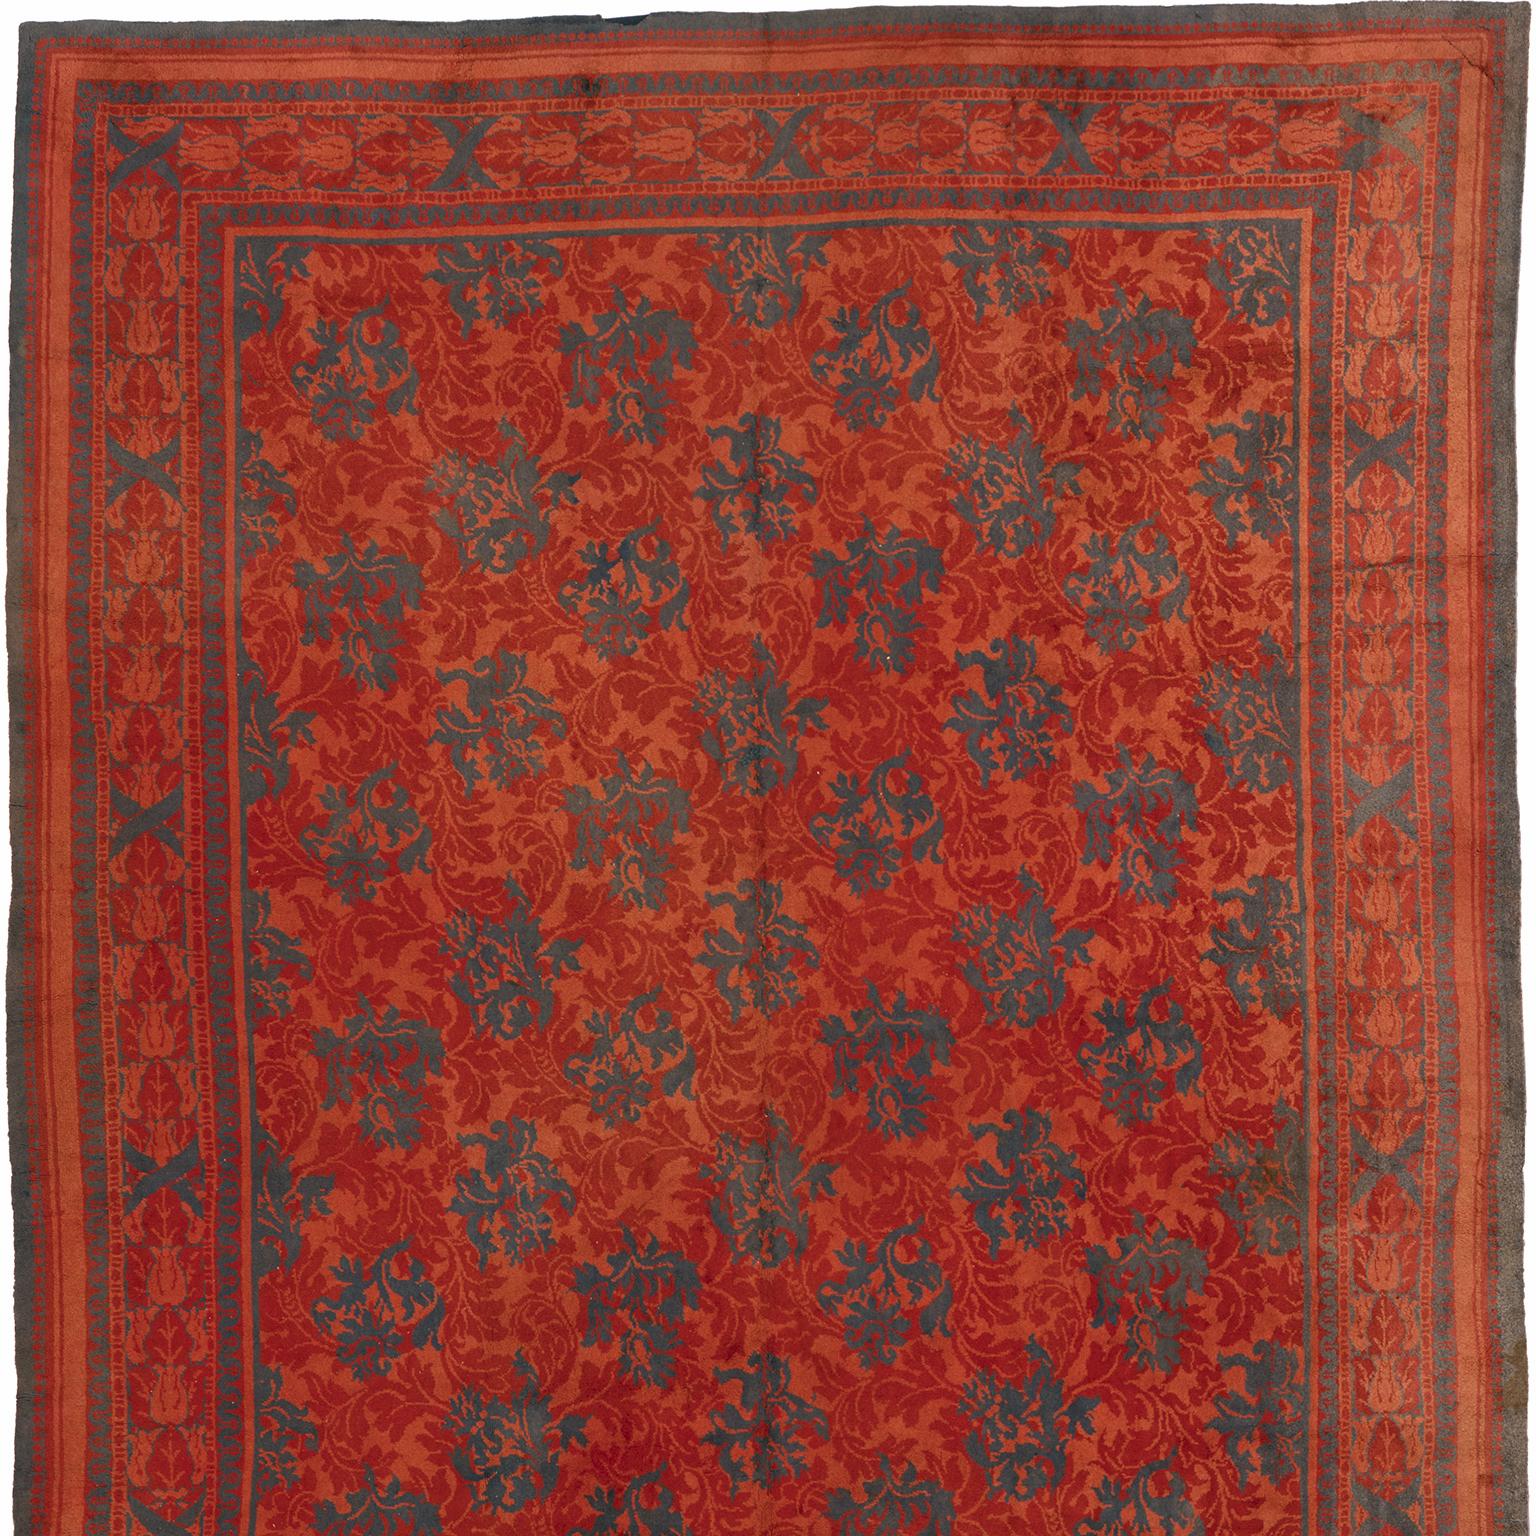 Late 19th century English Axminster rug
England, circa 1870
Handwoven
Measures: 26'7